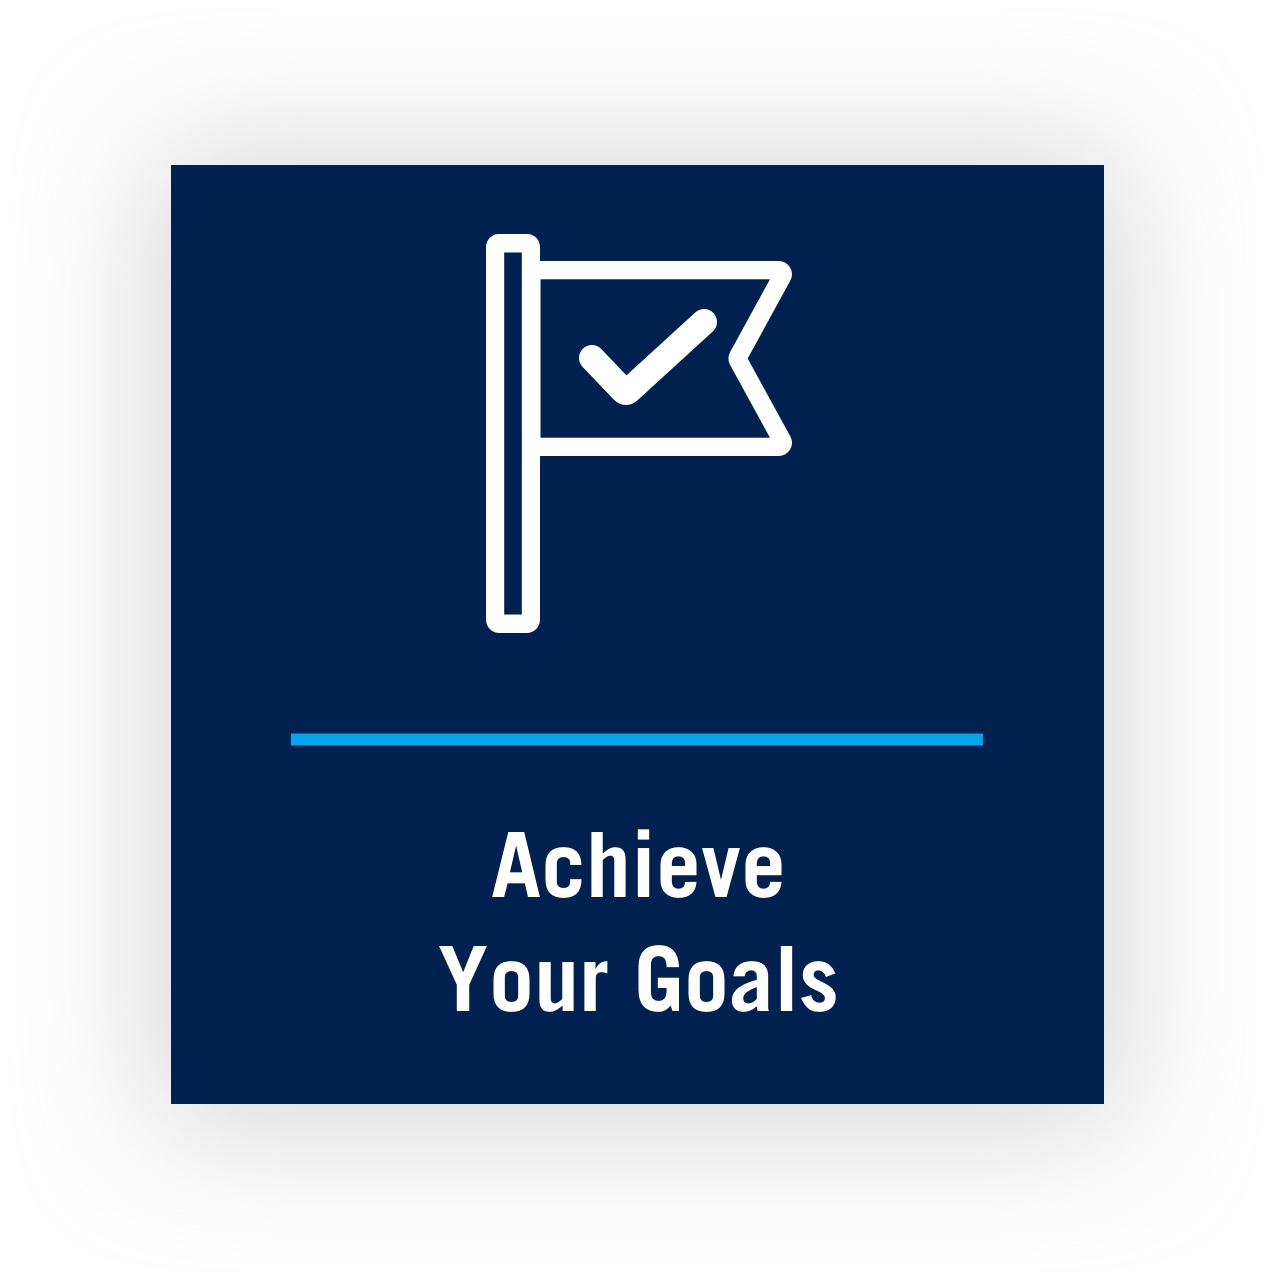 Achieve your goals image